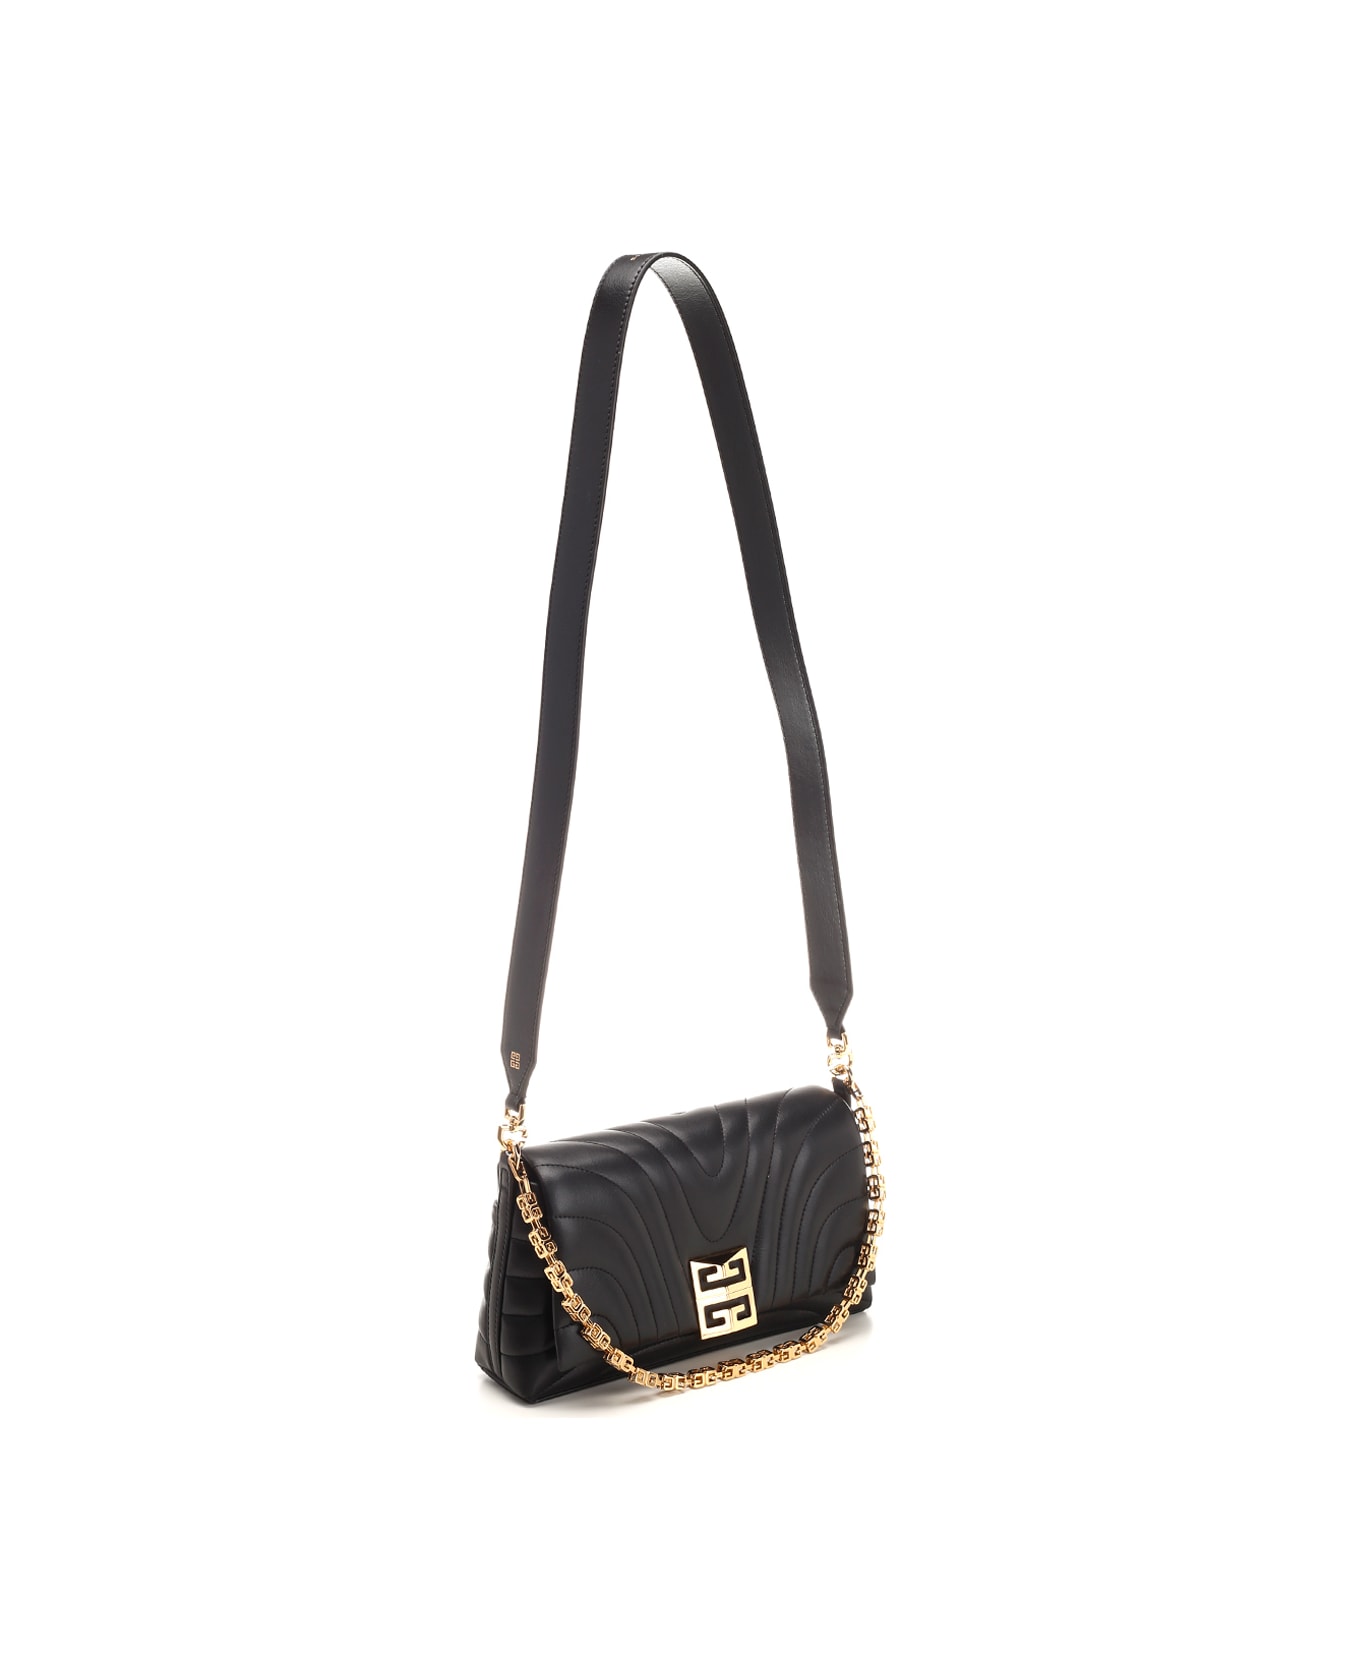 Givenchy '4g Soft' Medium Cross-body Bag - Black